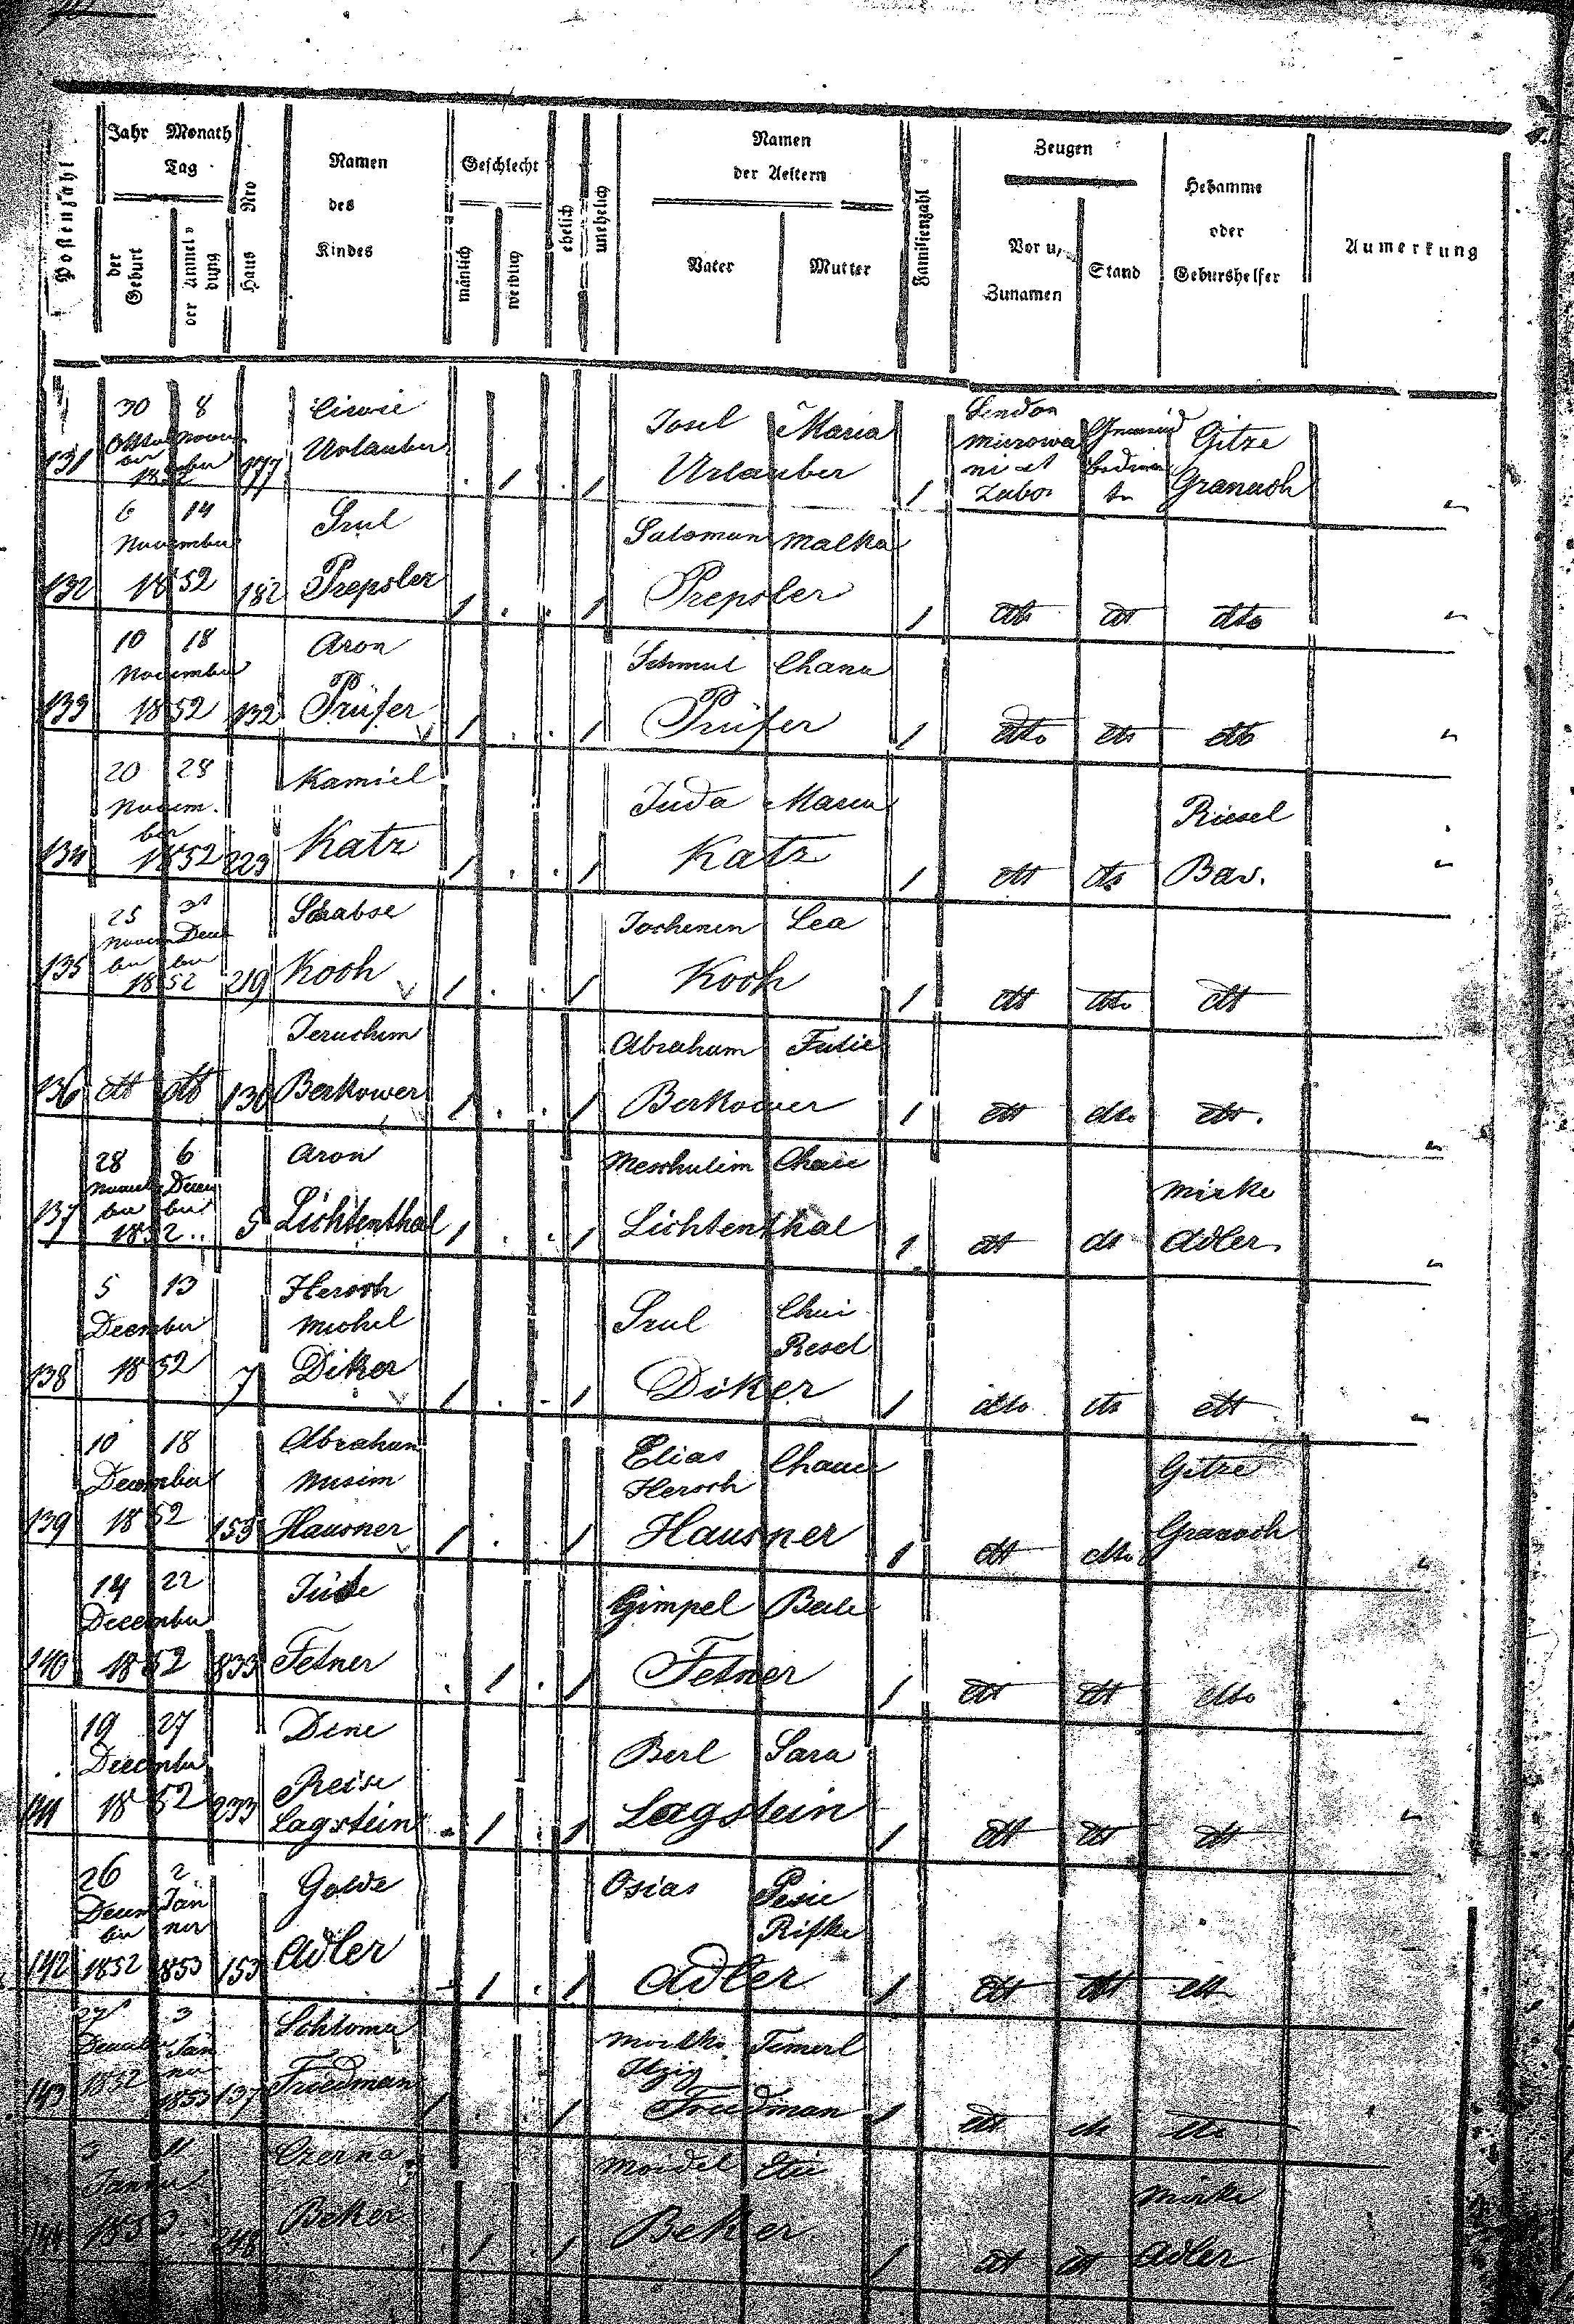 1852 Horodenka Birth Records